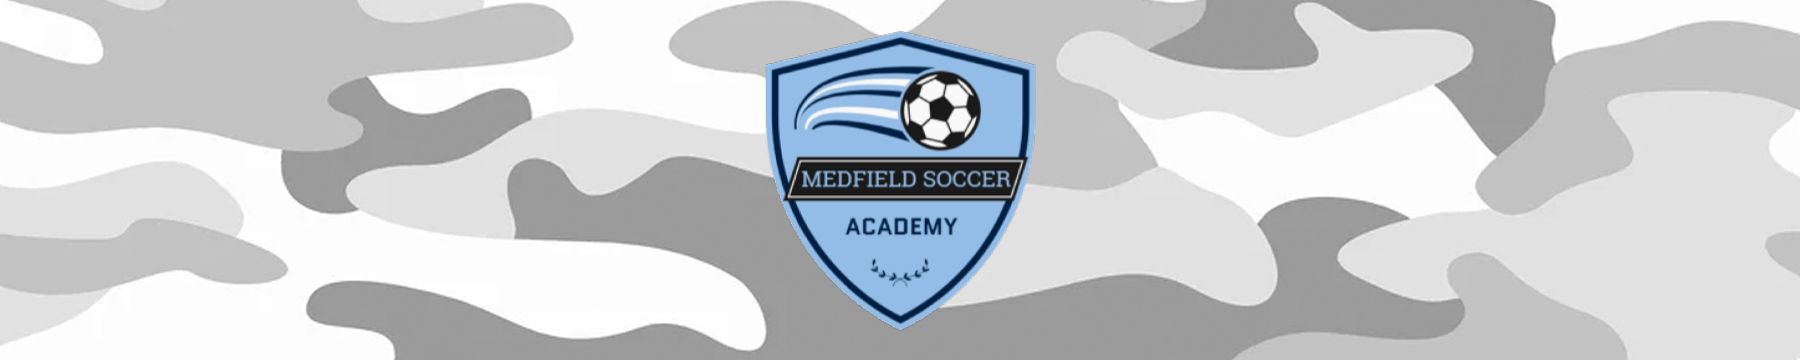 Medfield Soccer Academy